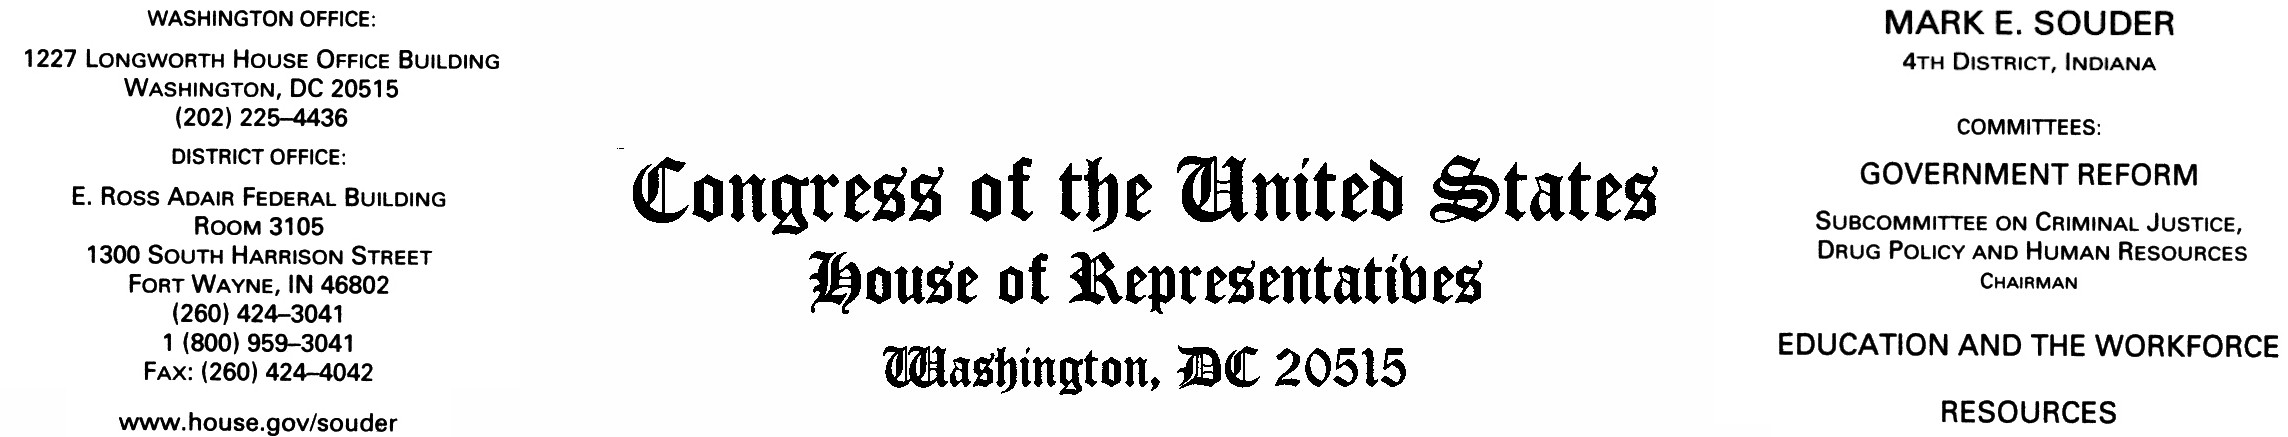 Congressman Souder's letterhead